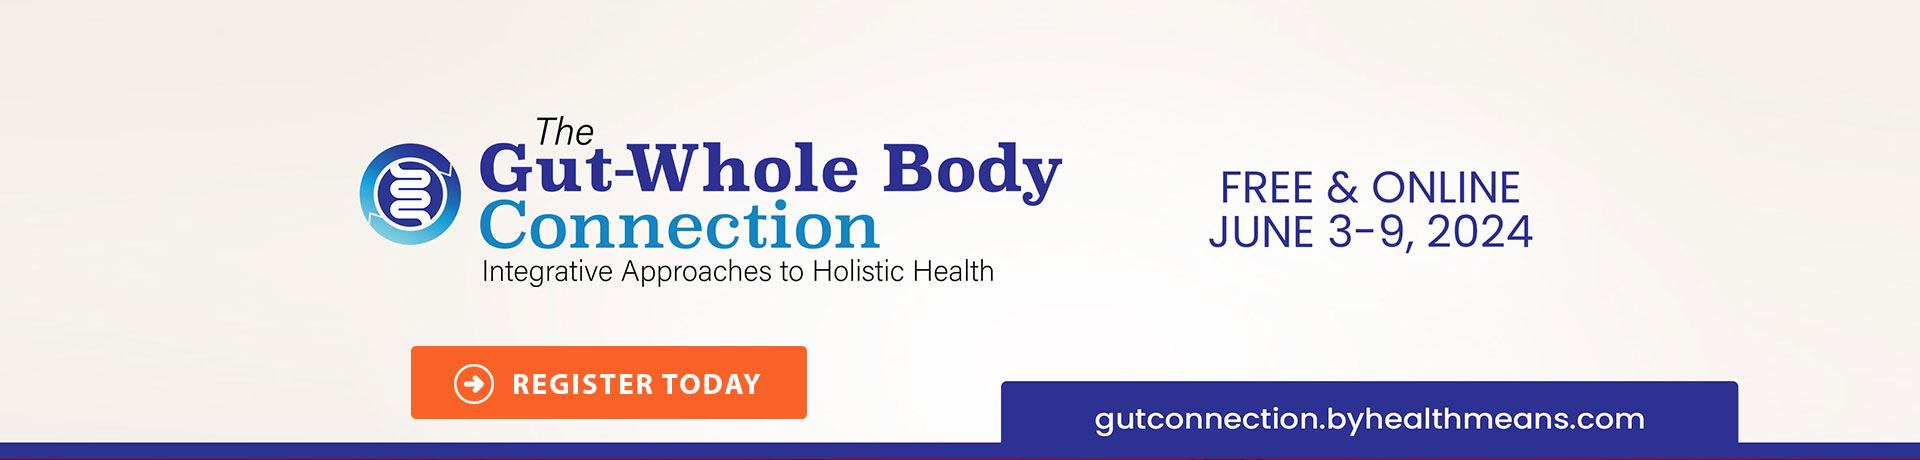 Gut-Whole Body Connection Event Registration